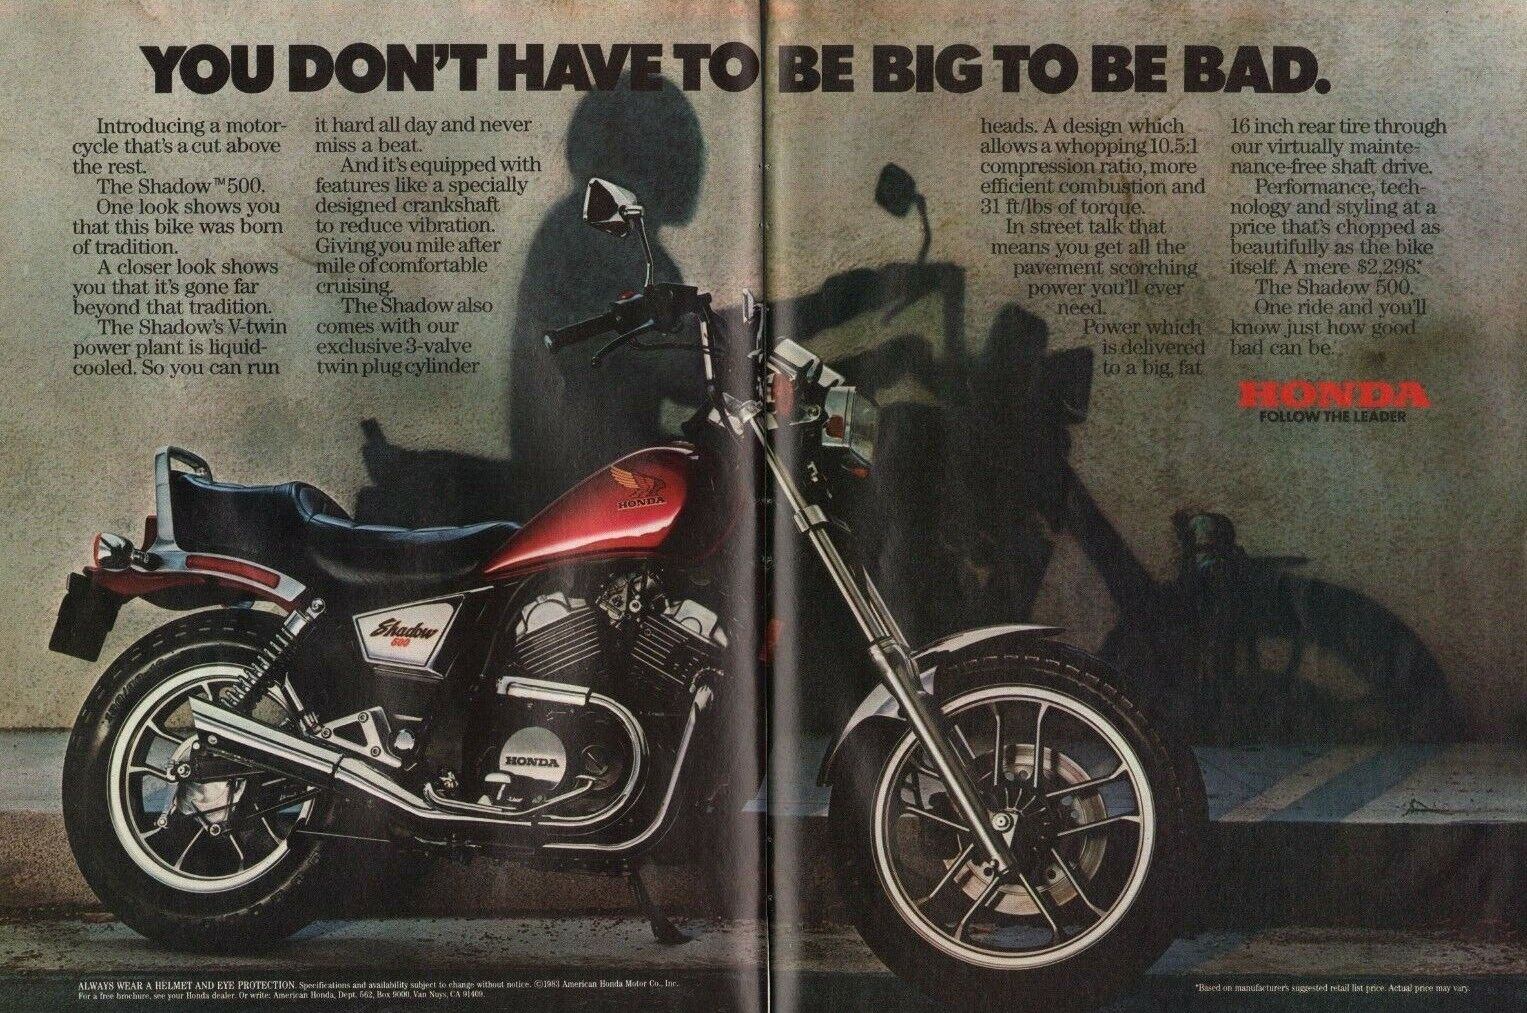 1983 Honda Shadow 500 - 2-Page Vintage Motorcycle Ad